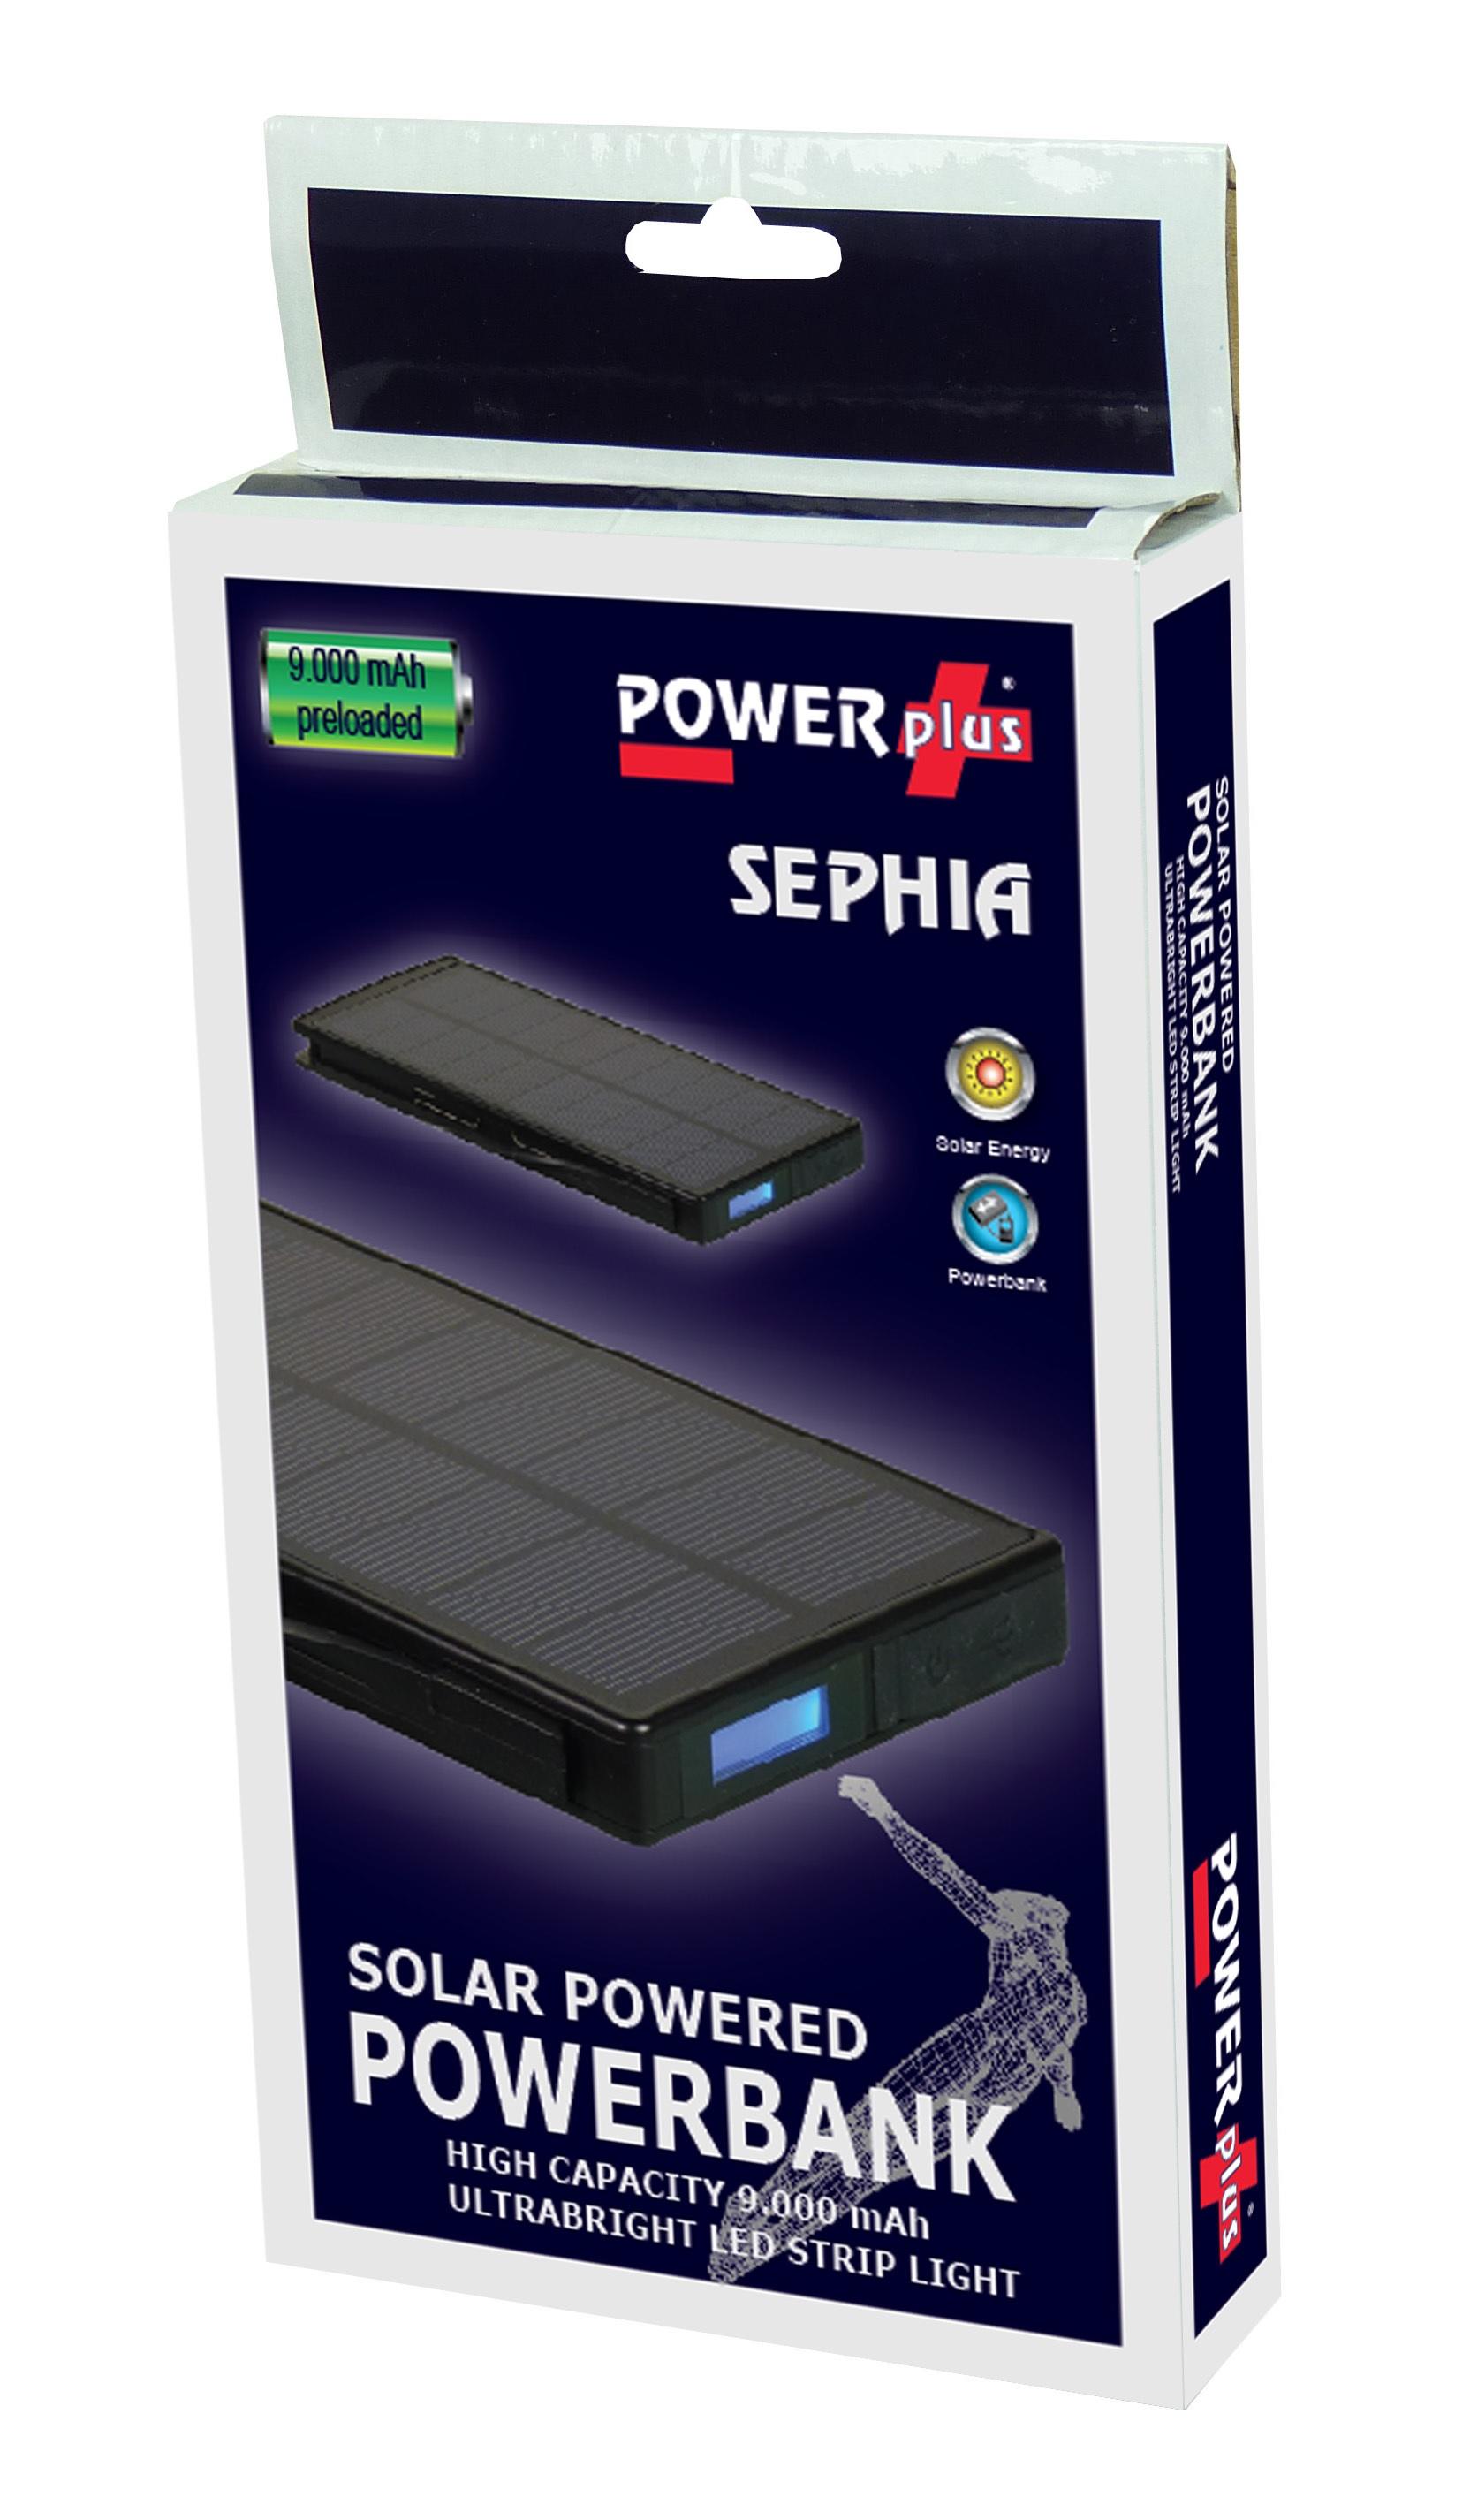 POWERplus Sephia High Capacity Solar Powerbank 9000 LED Strip Light